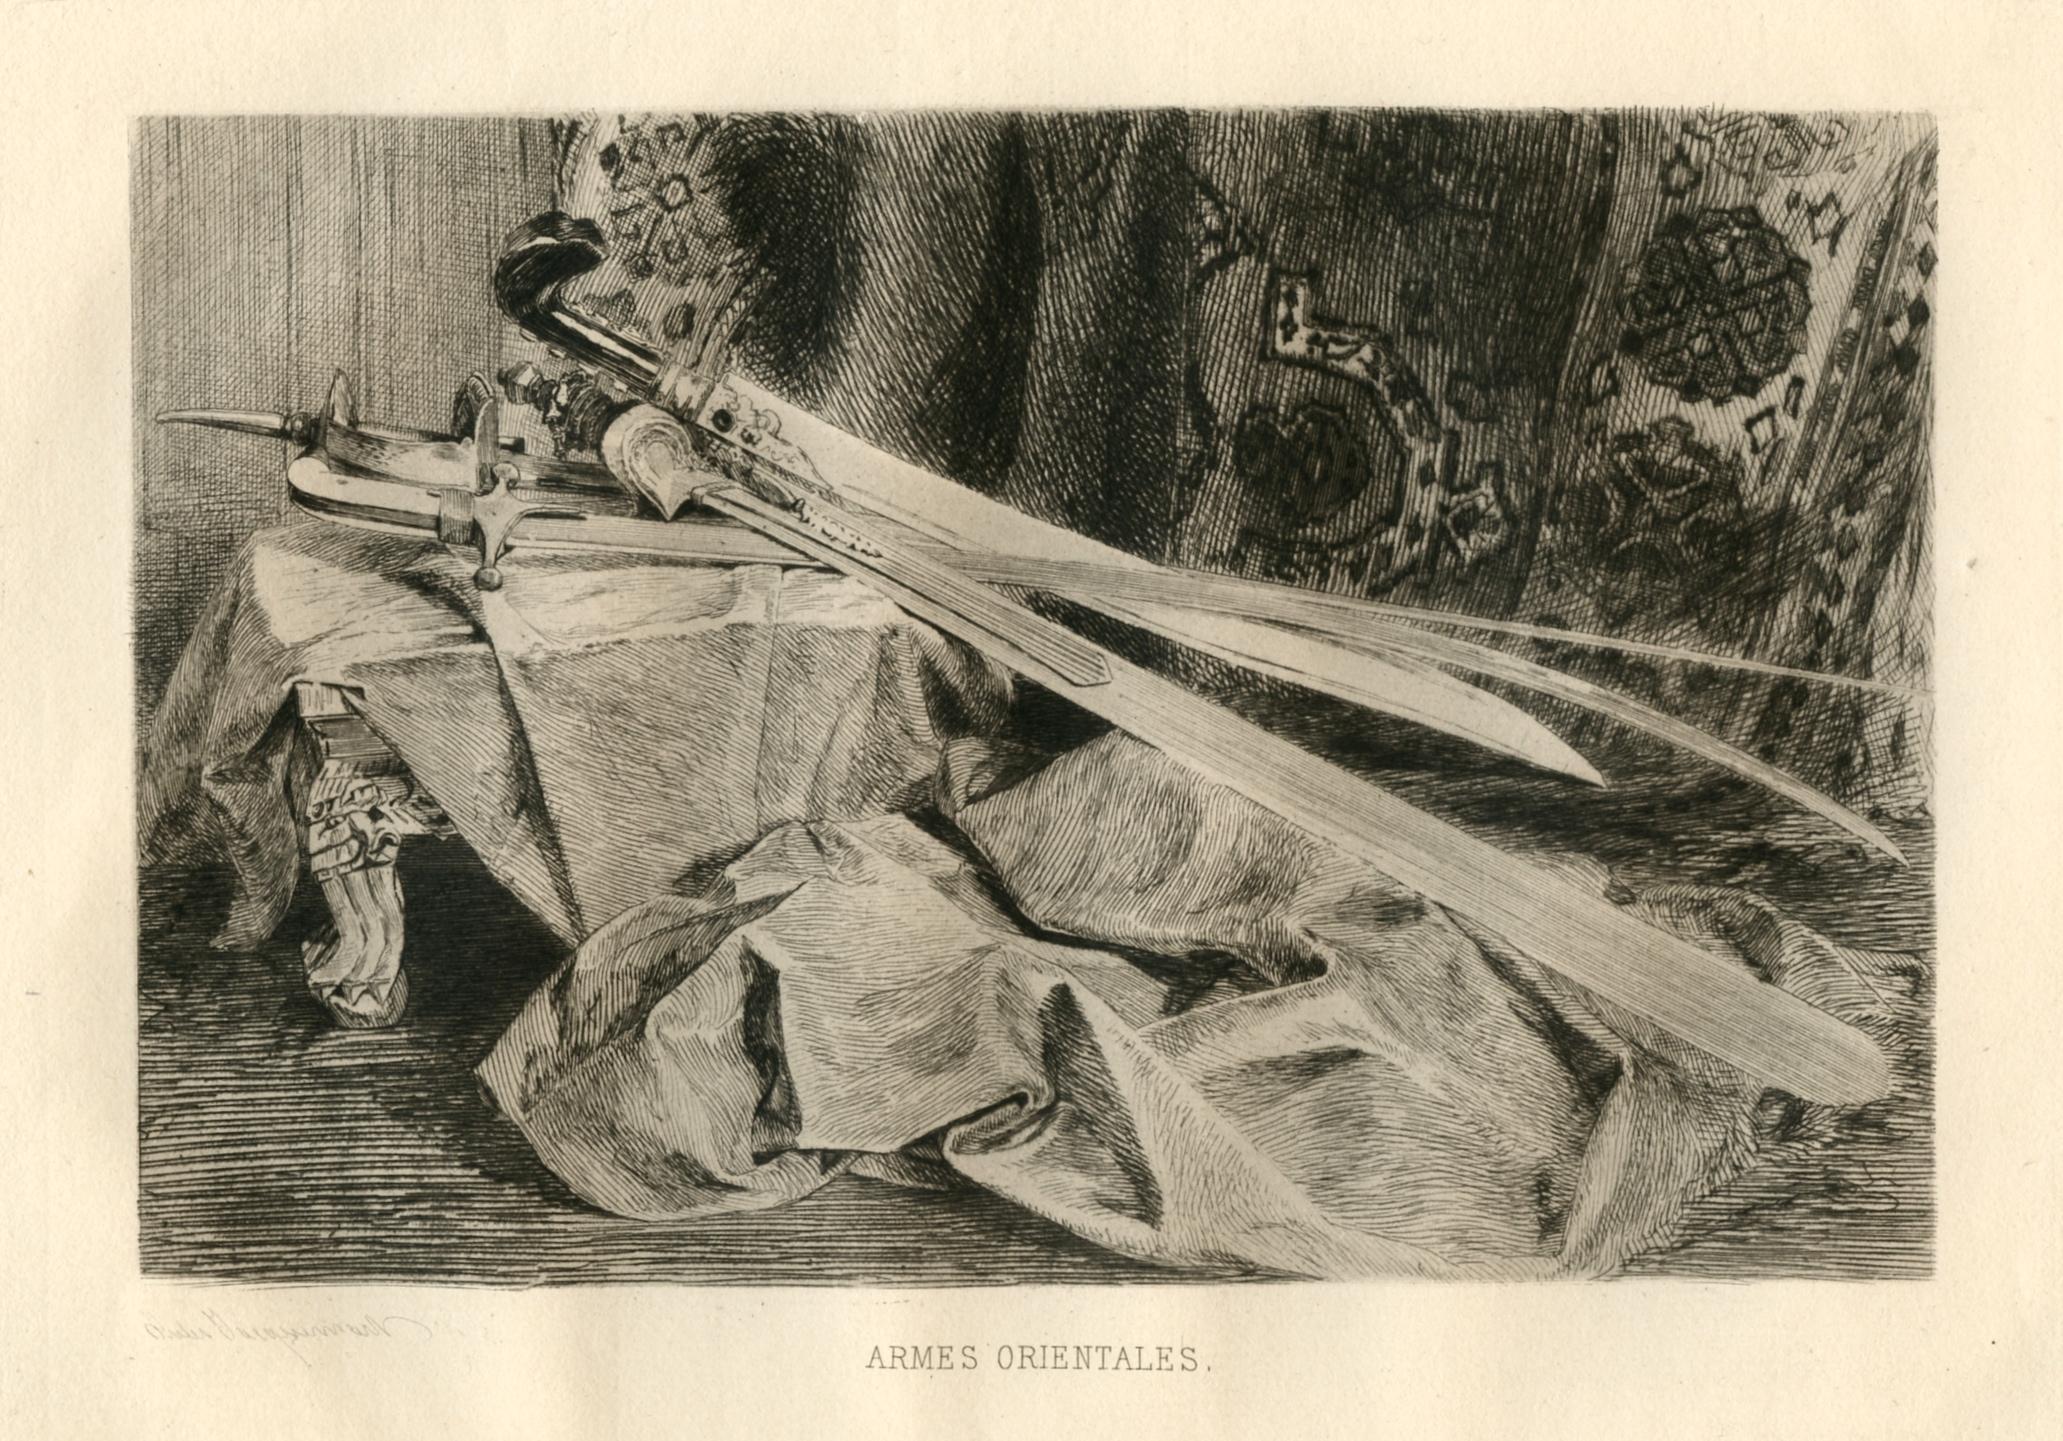 "Armes Orientales" original etching - Print by Jules Jacquemart